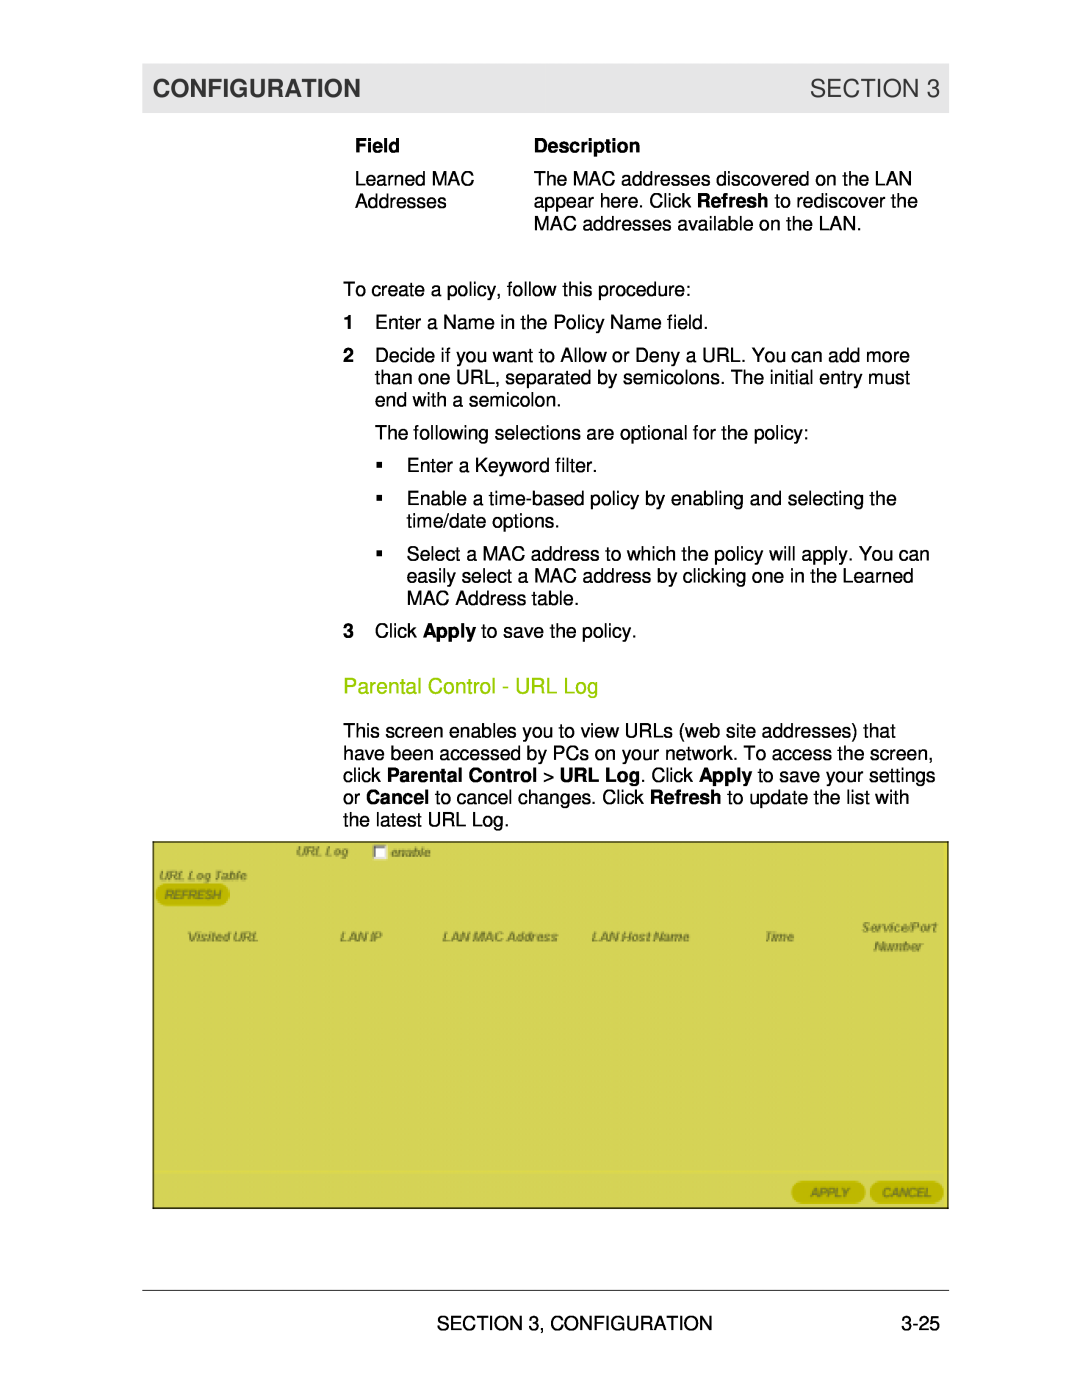 Motorola WR850G manual Parental Control - URL Log, Configuration, Section, Field, Description 